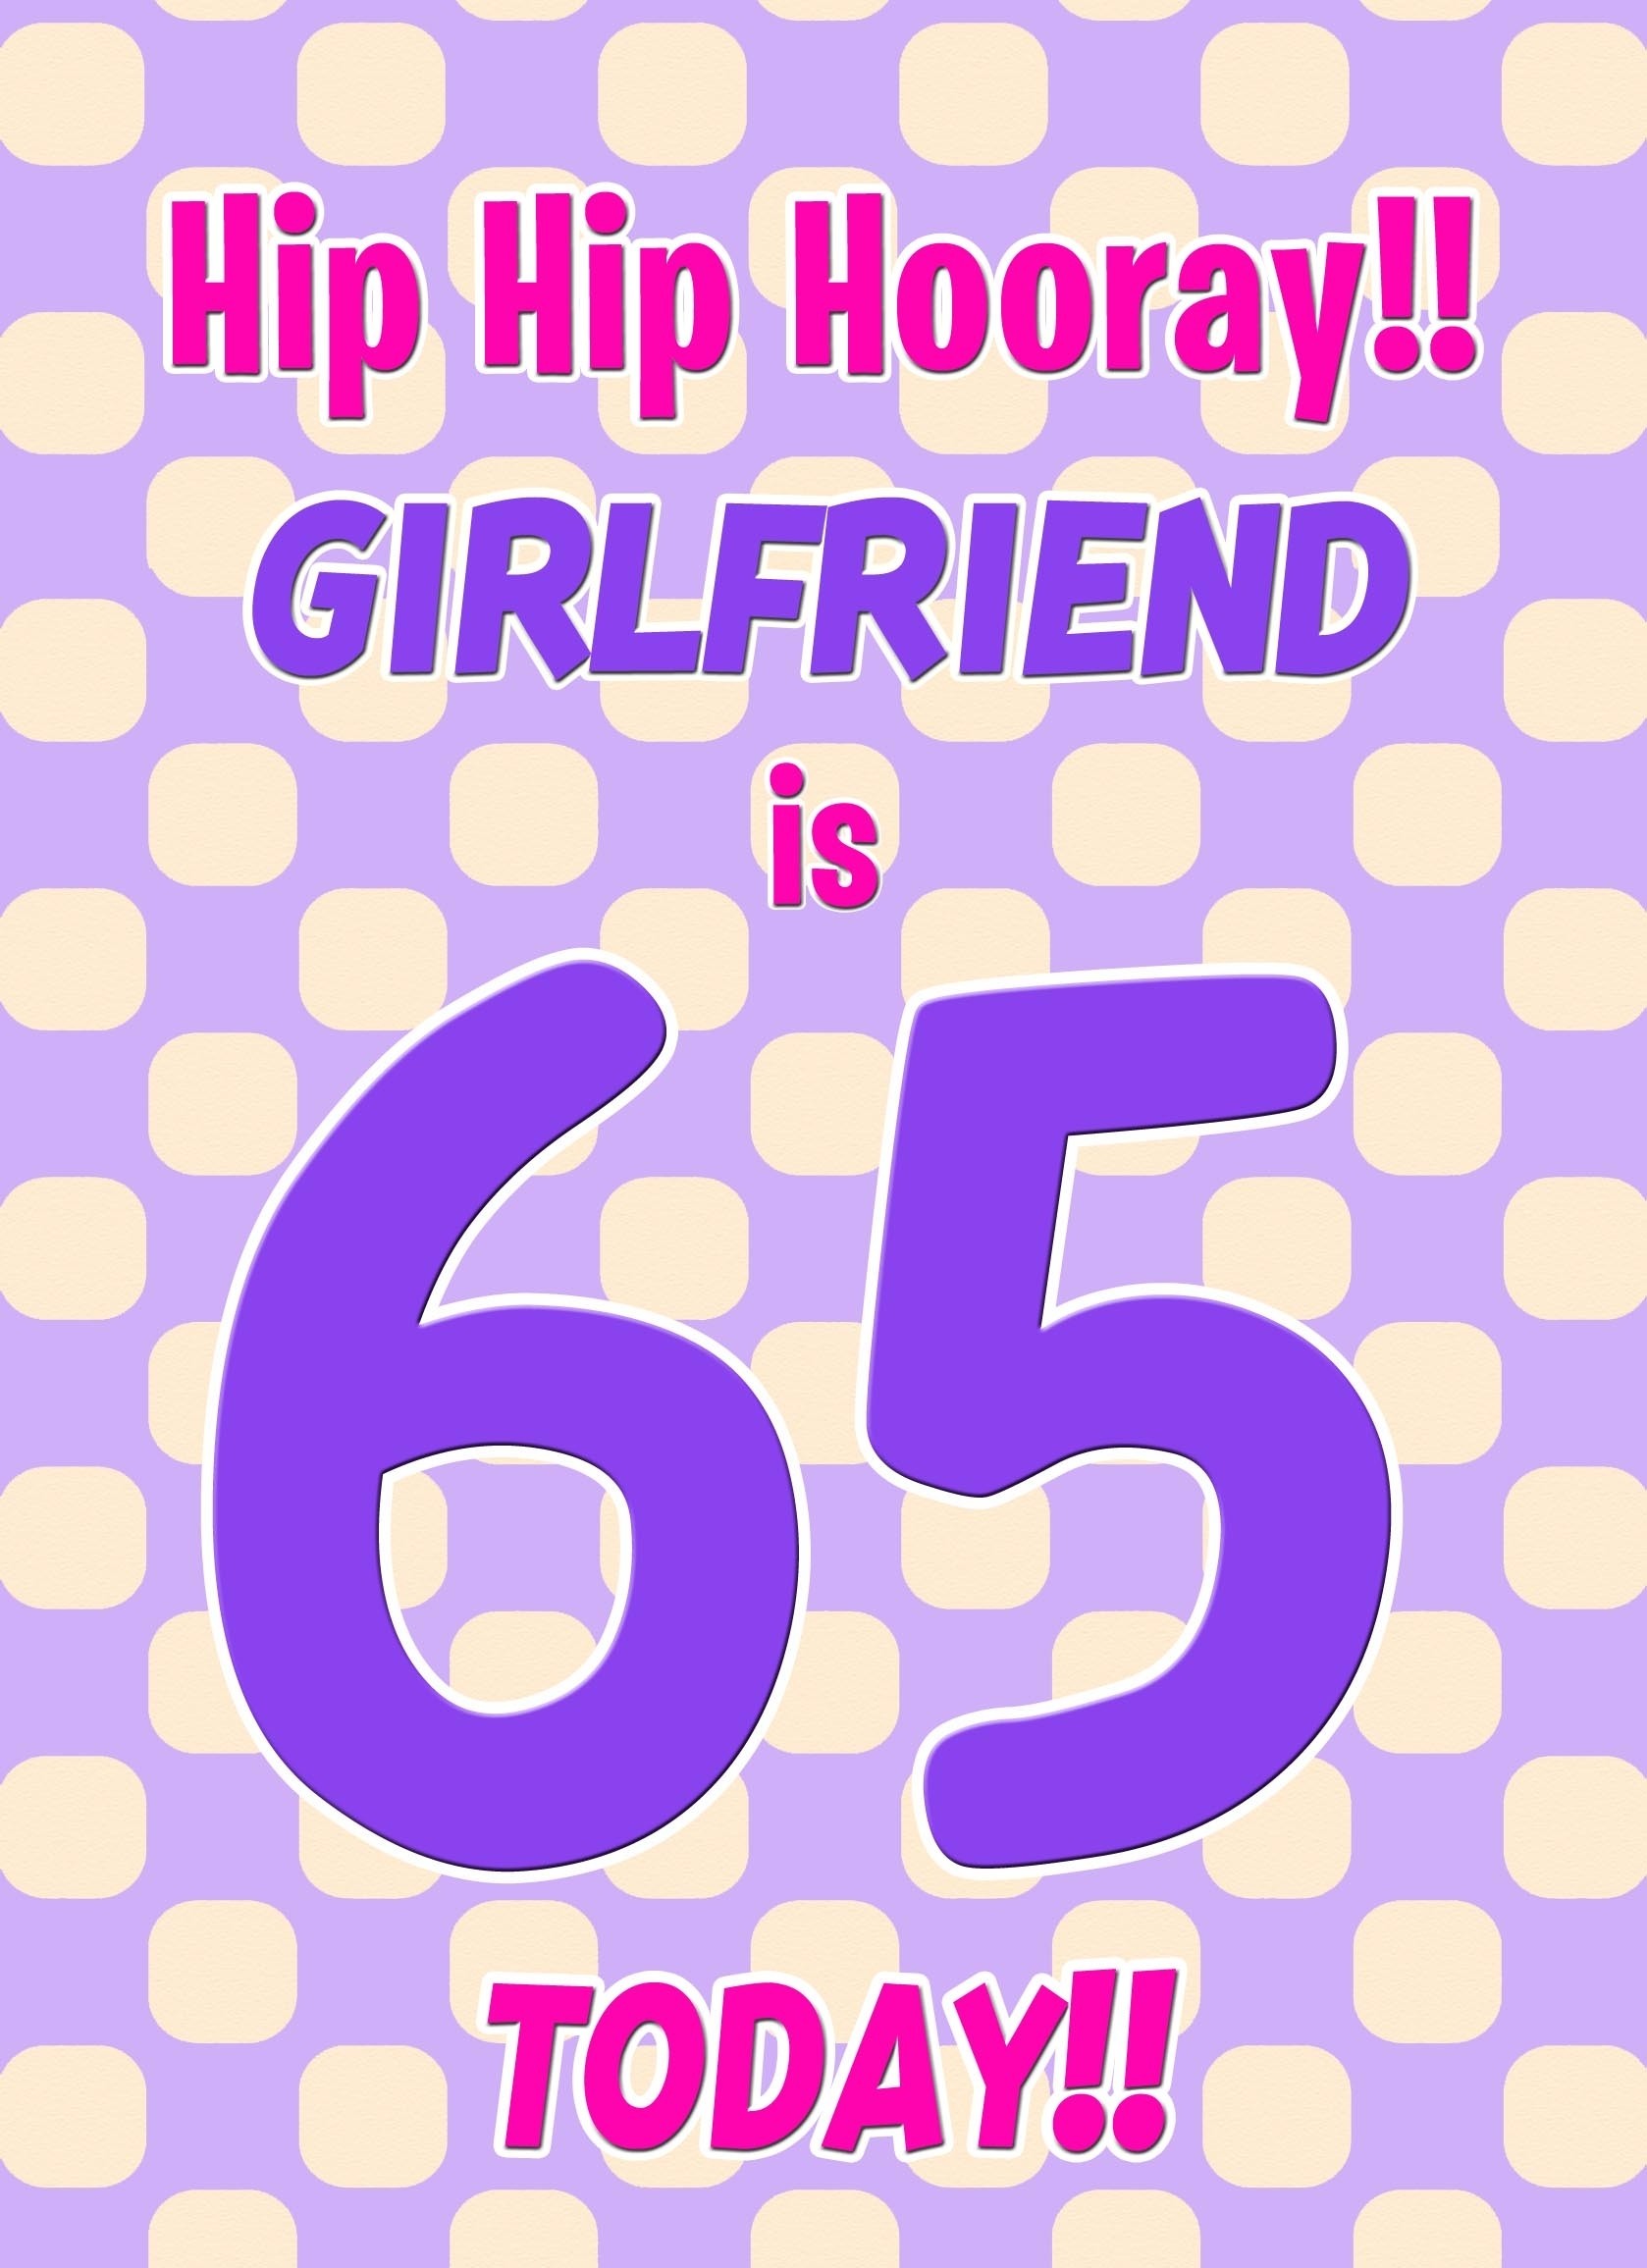 Girlfriend 65th Birthday Card (Purple Spots)